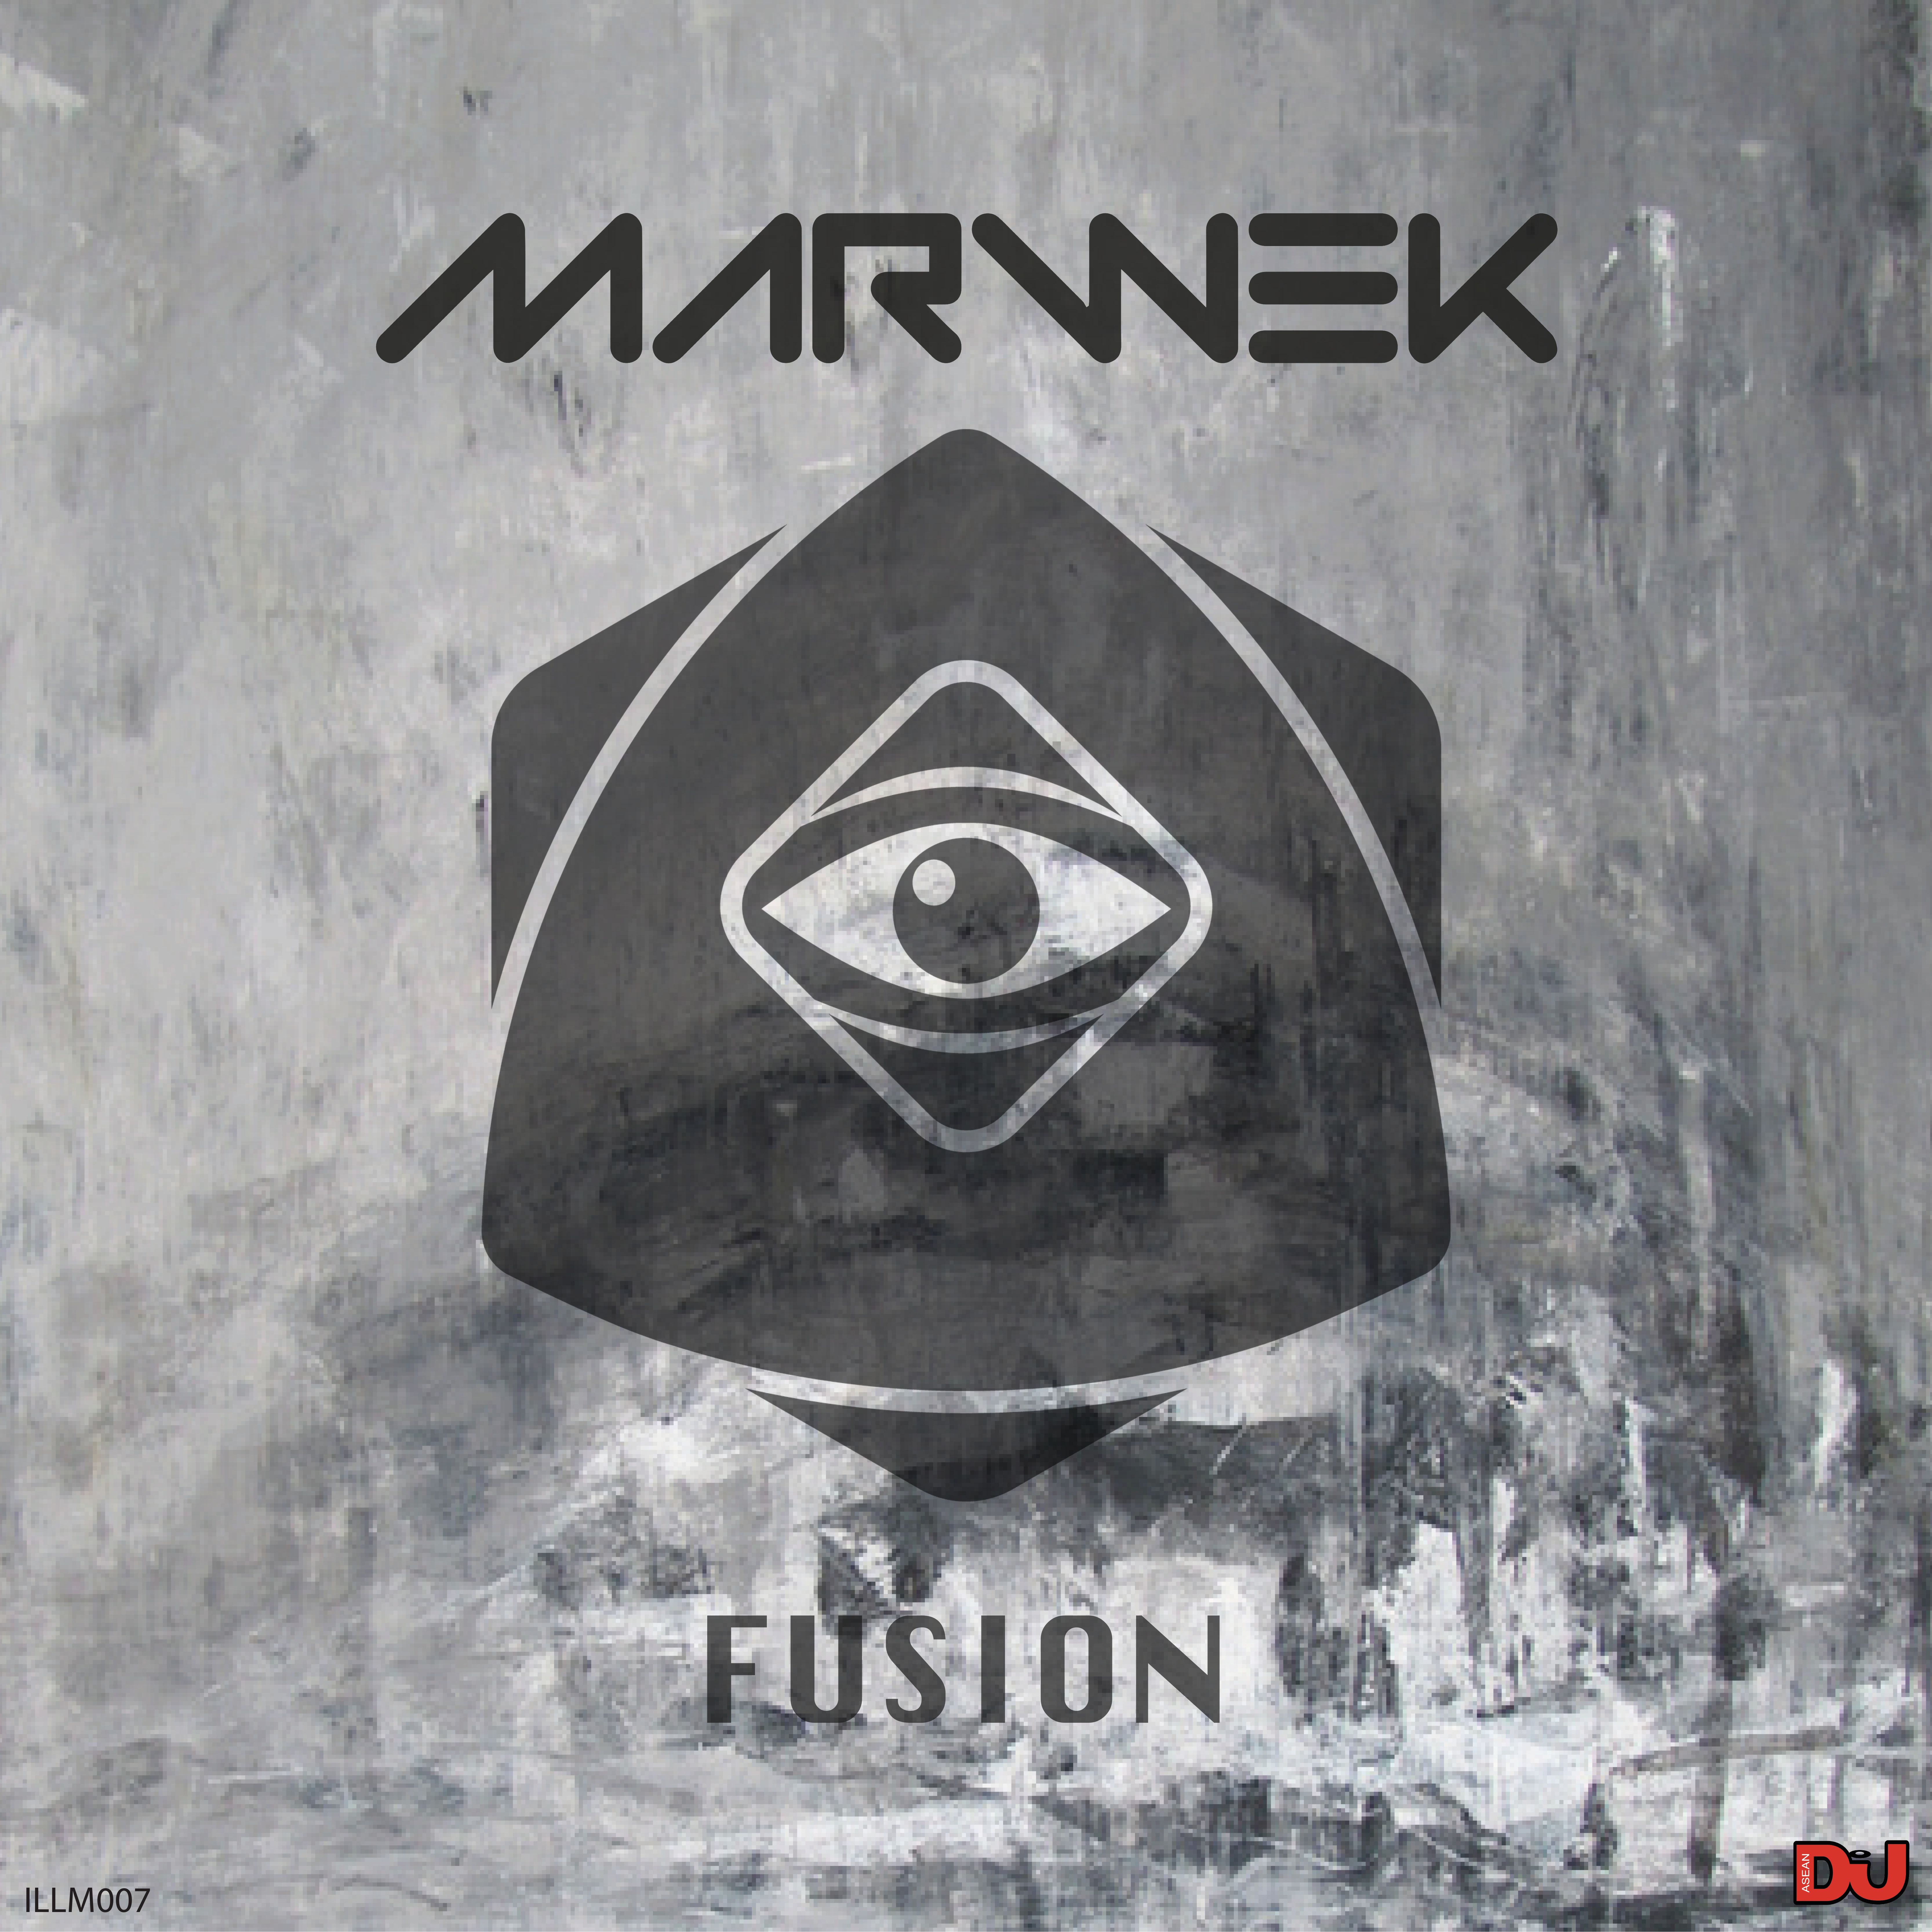 Soo dejiso Marwek - Fusion (Original Mix)